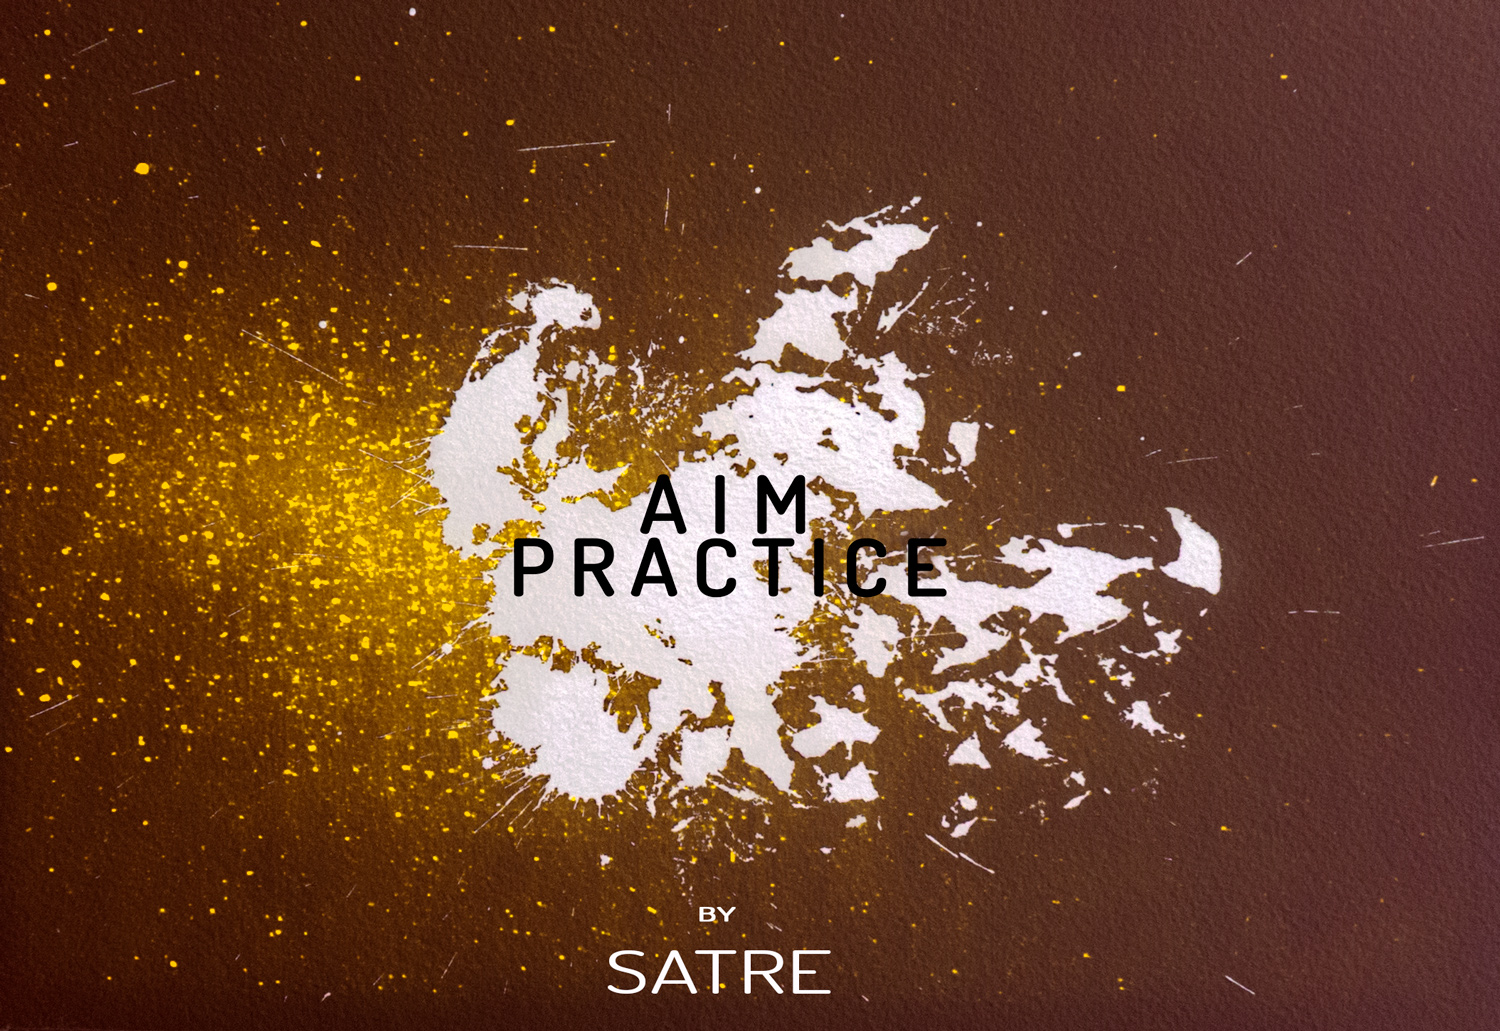 Aim-Practice-front-1500-geir-satre.jpg